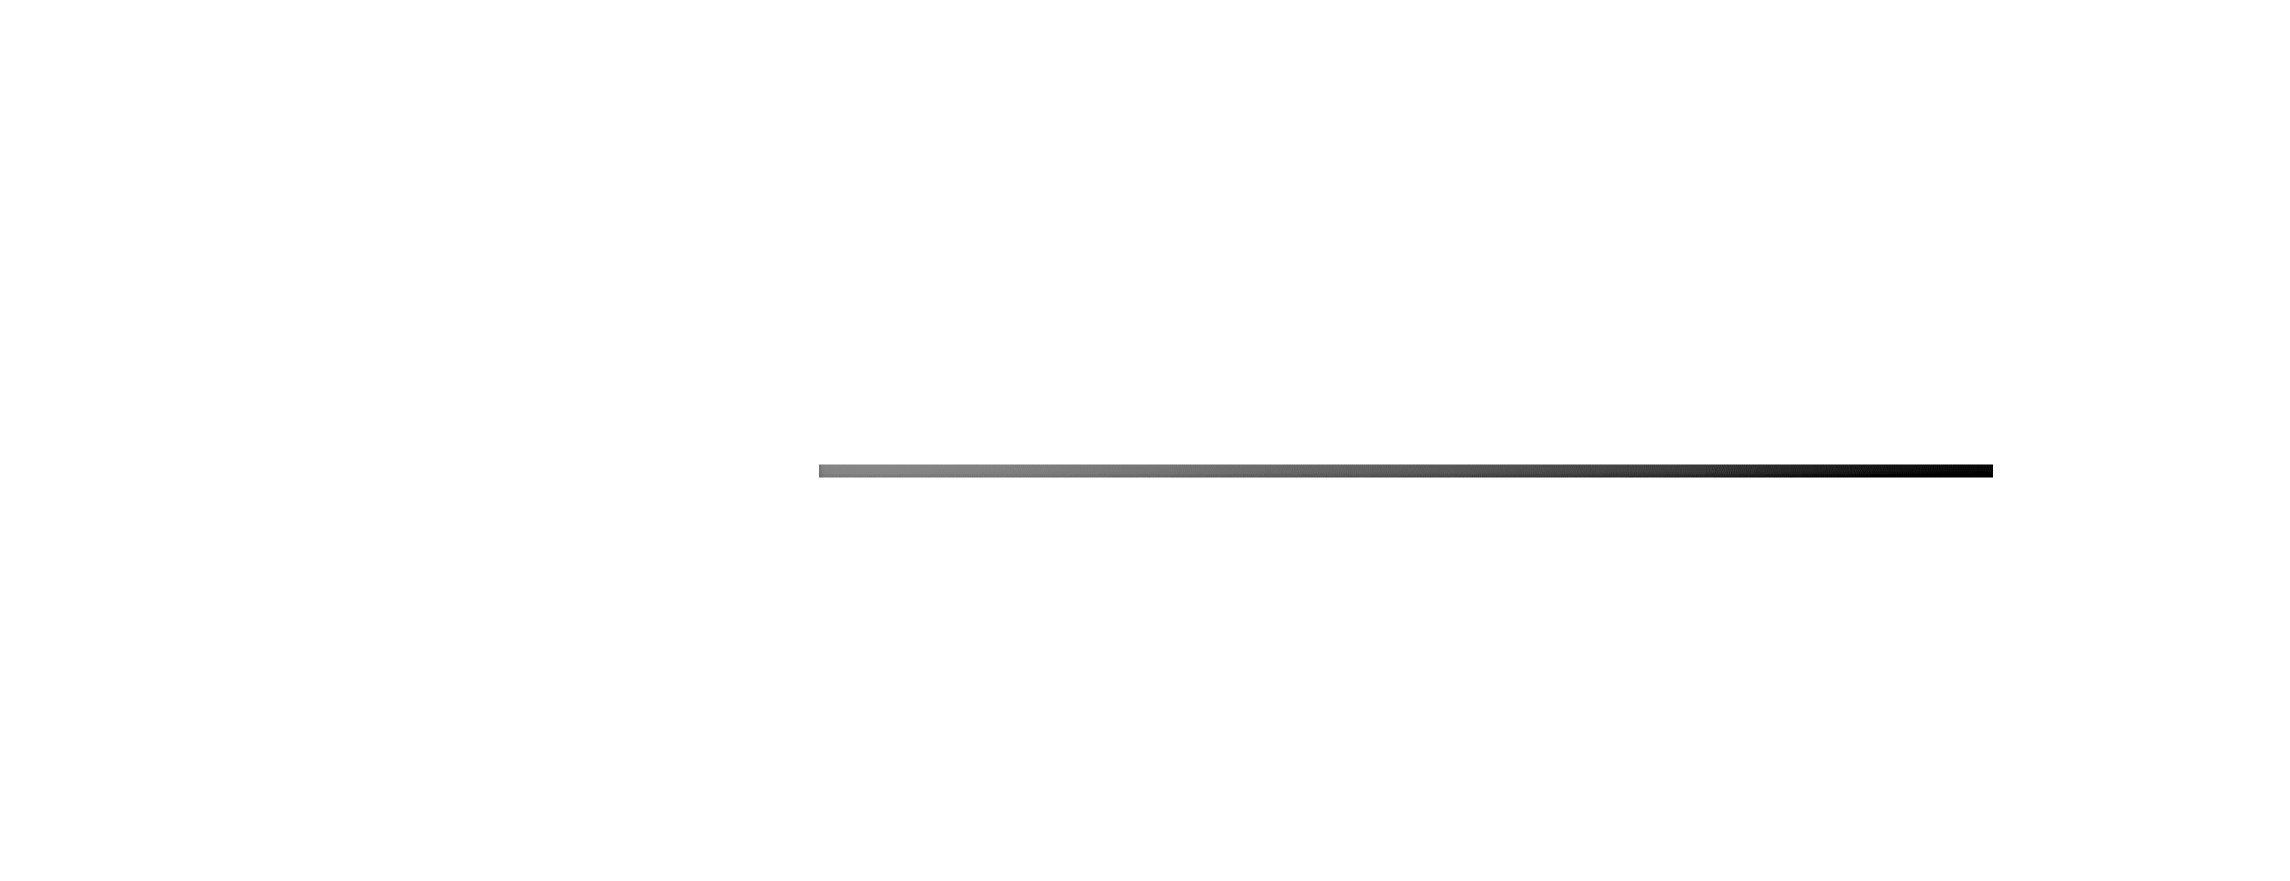 EZ Revolition Tattoo Module